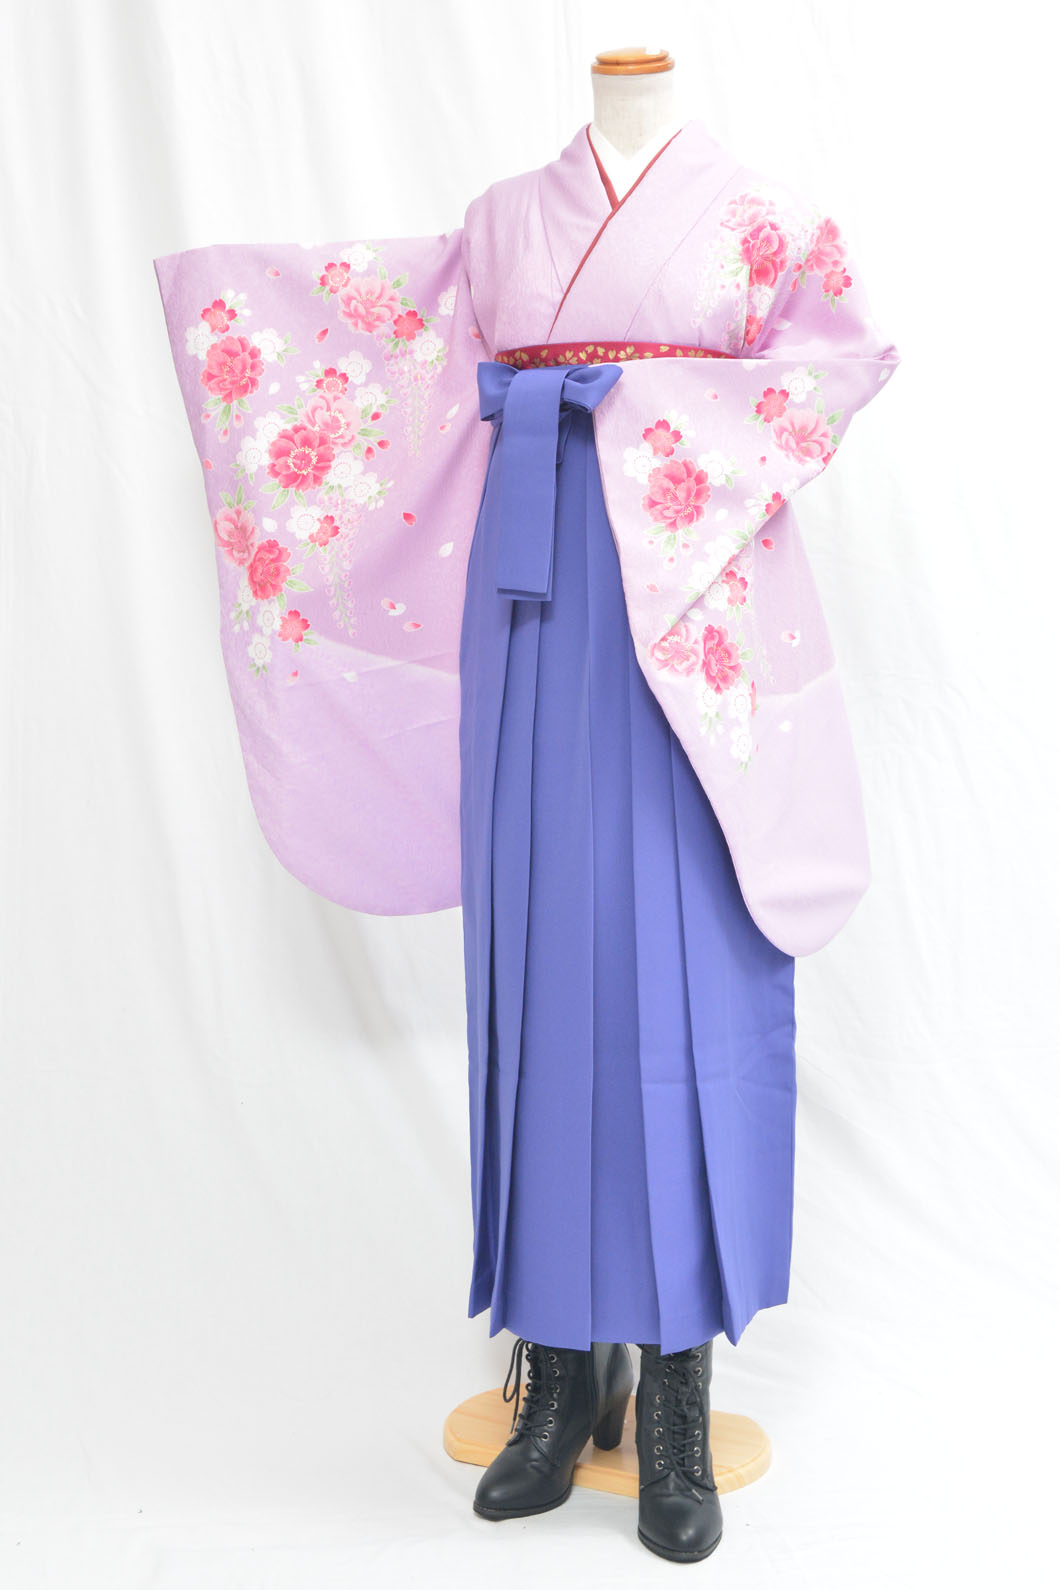 Omうす紫下がり藤に桜 むらさきパープル 福岡 北九州 山口の卒業式の袴レンタルなら新美